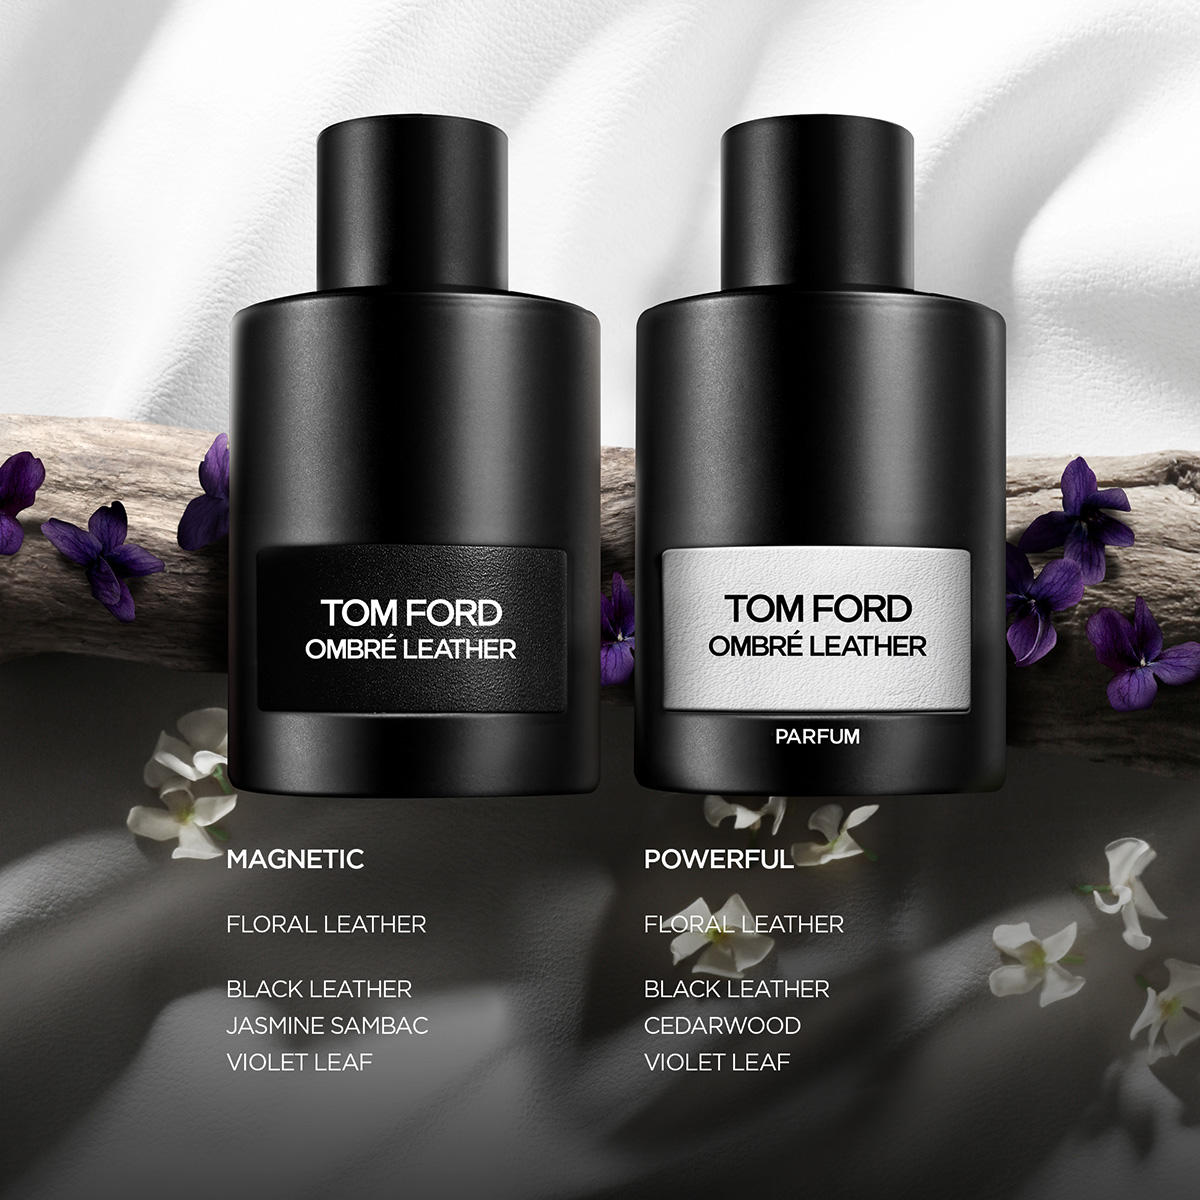 Tom Ford Ombré Leather Parfum 50 ml comprare online | baslerbeauty